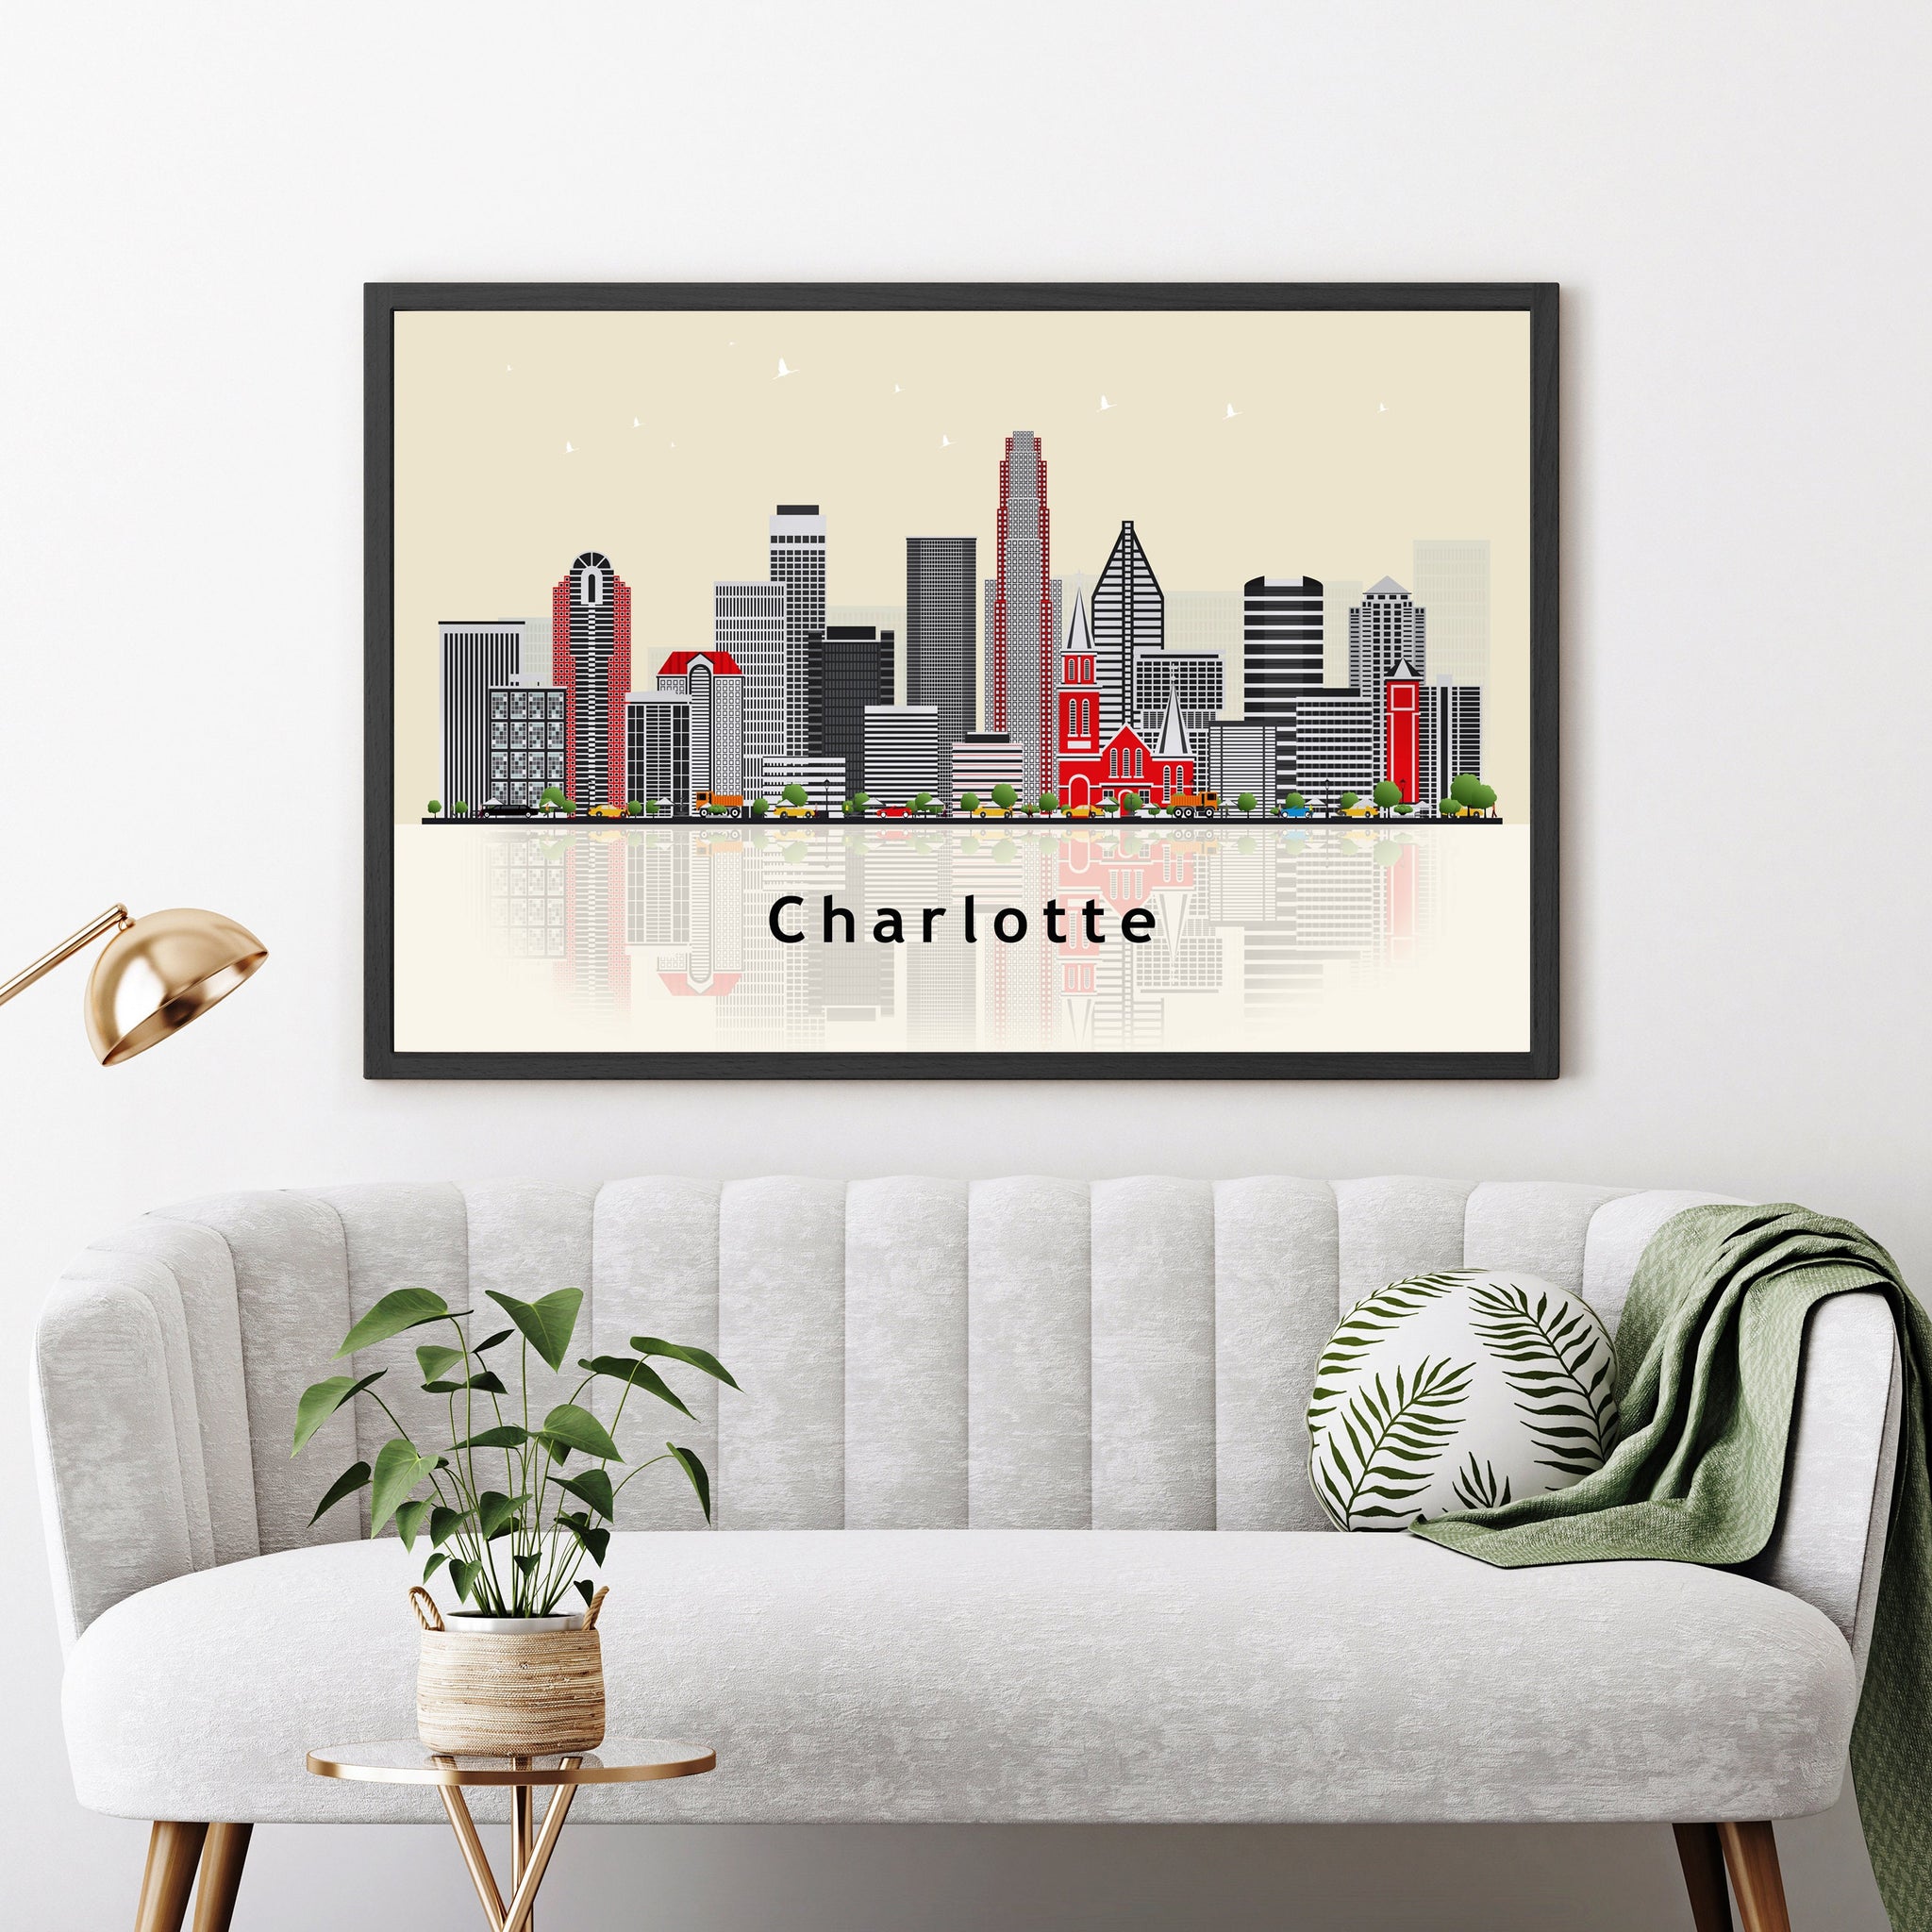 CHARLOTTE NORTH CAROLINA Illustration skyline poster, North Carolina state modern skyline cityscape poster, Landmark art print, Gift for her